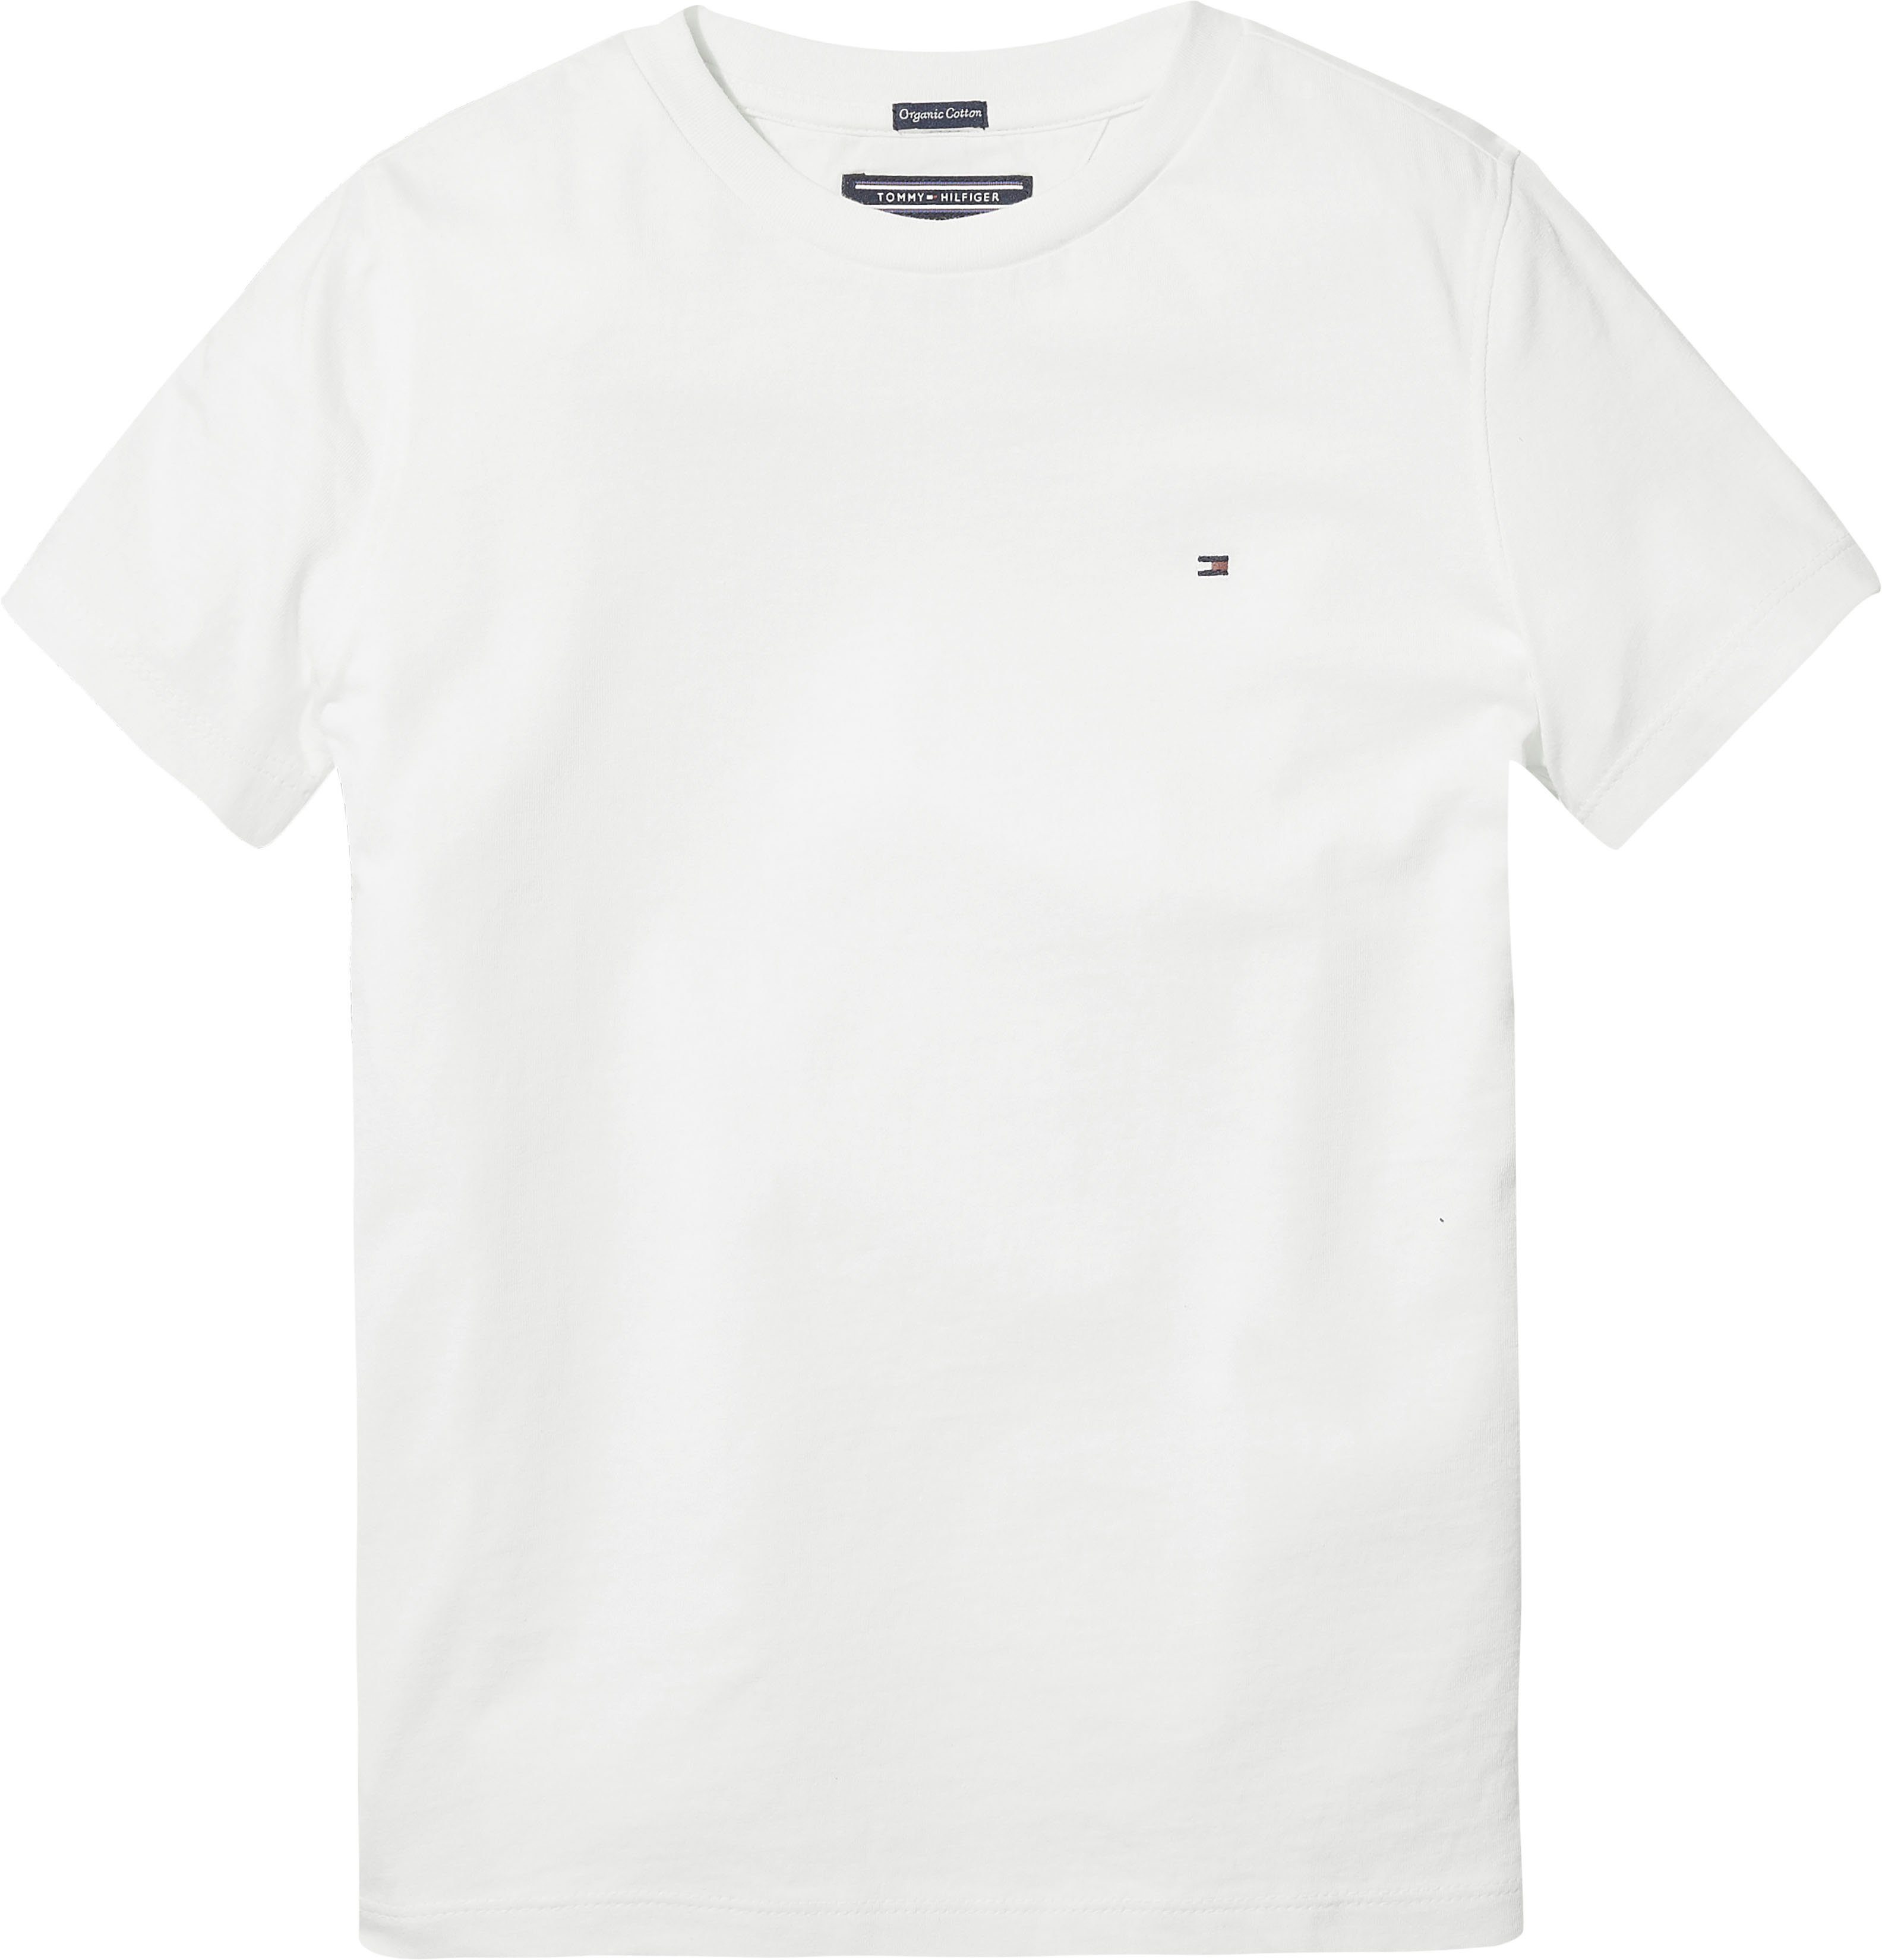 Tommy Hilfiger BASIC KNIT Junior BOYS CN Kinder Kids T-Shirt MiniMe